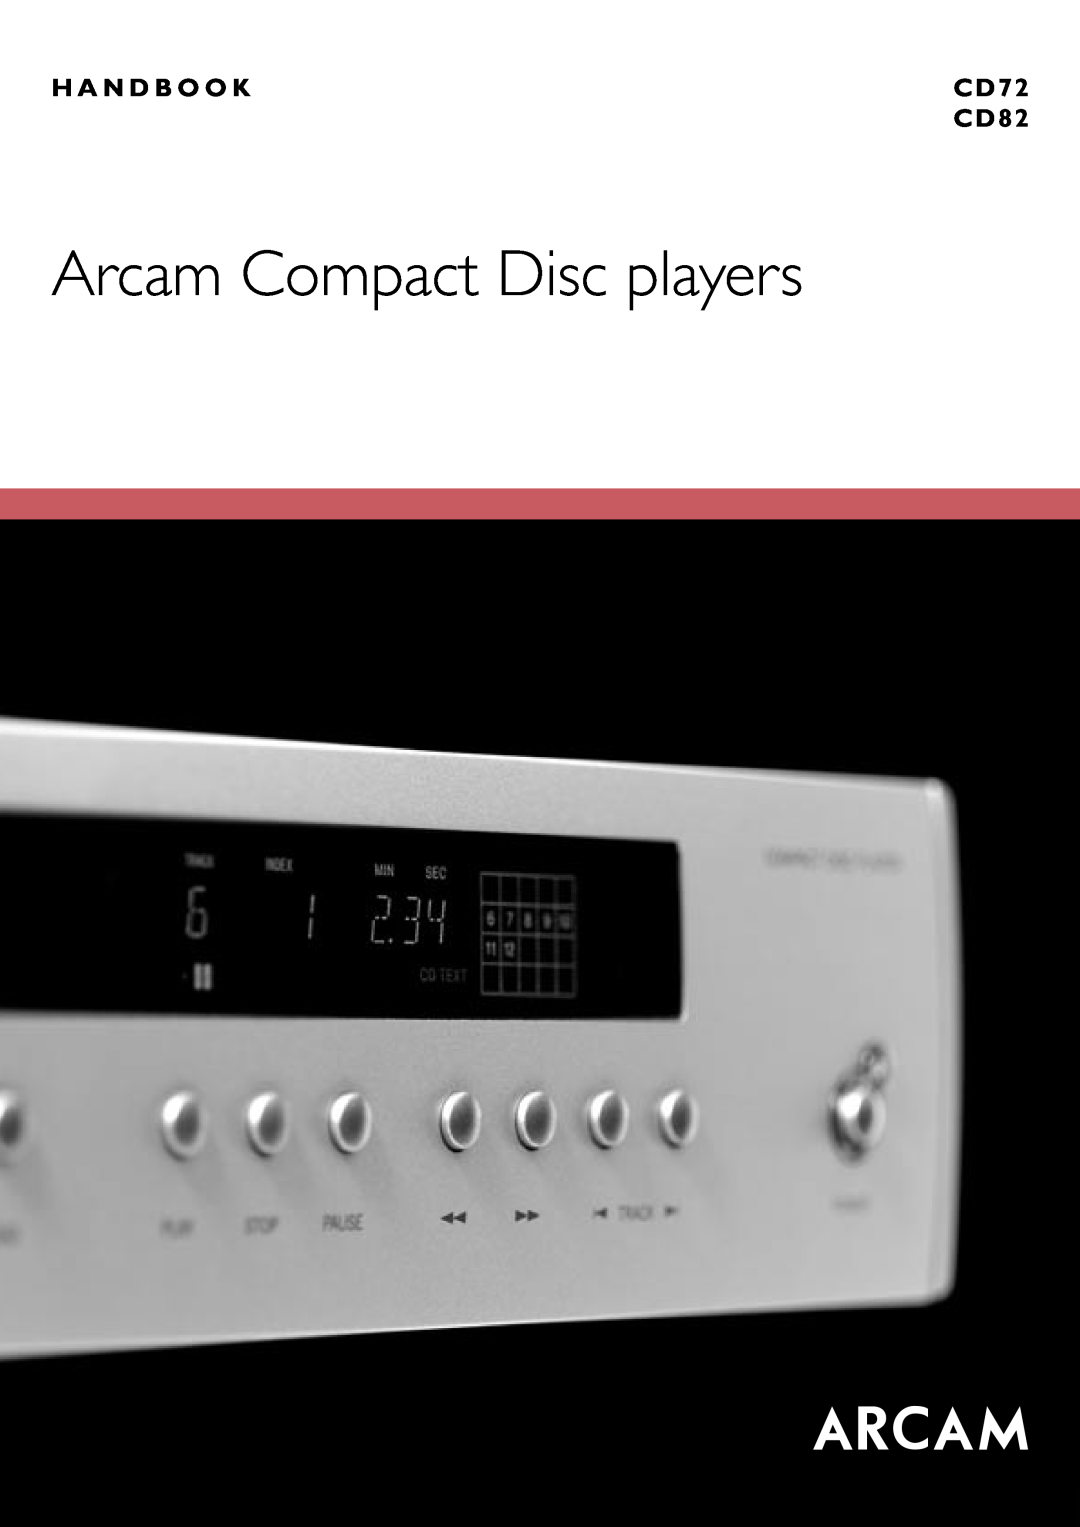 Arcam CD72 manual English, Français, Deutsch, Arcam Compact Disc players, Lecteurs de CD Arcam, Arcam Compact Disc-Spieler 